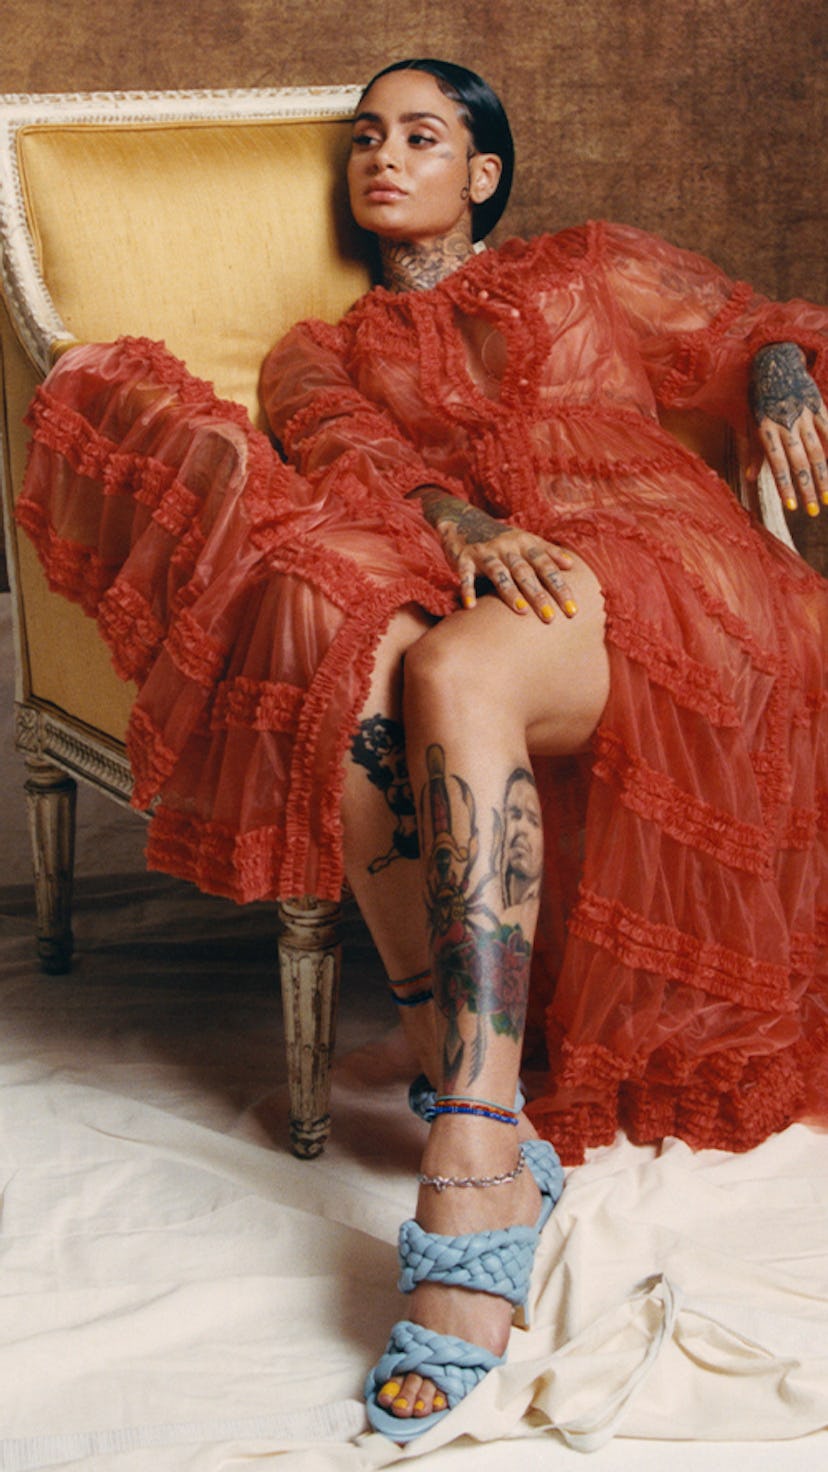 Kehlani wearing a sheer pre-fall 2020 gown